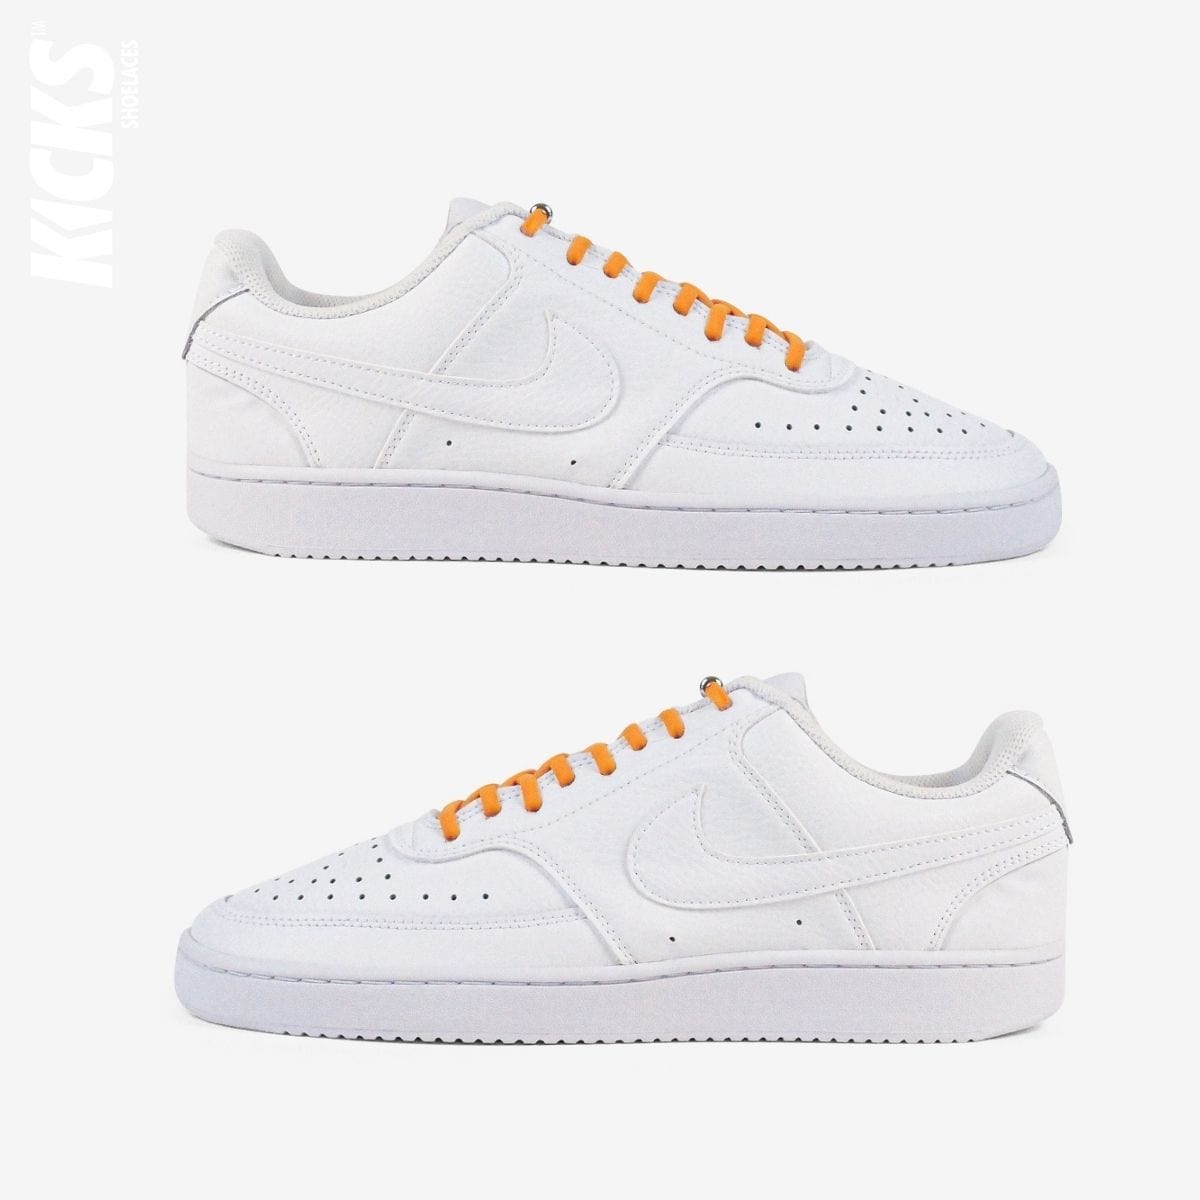 cool-shoelaces-for-popular-sneakers-in-orange-by-kicks